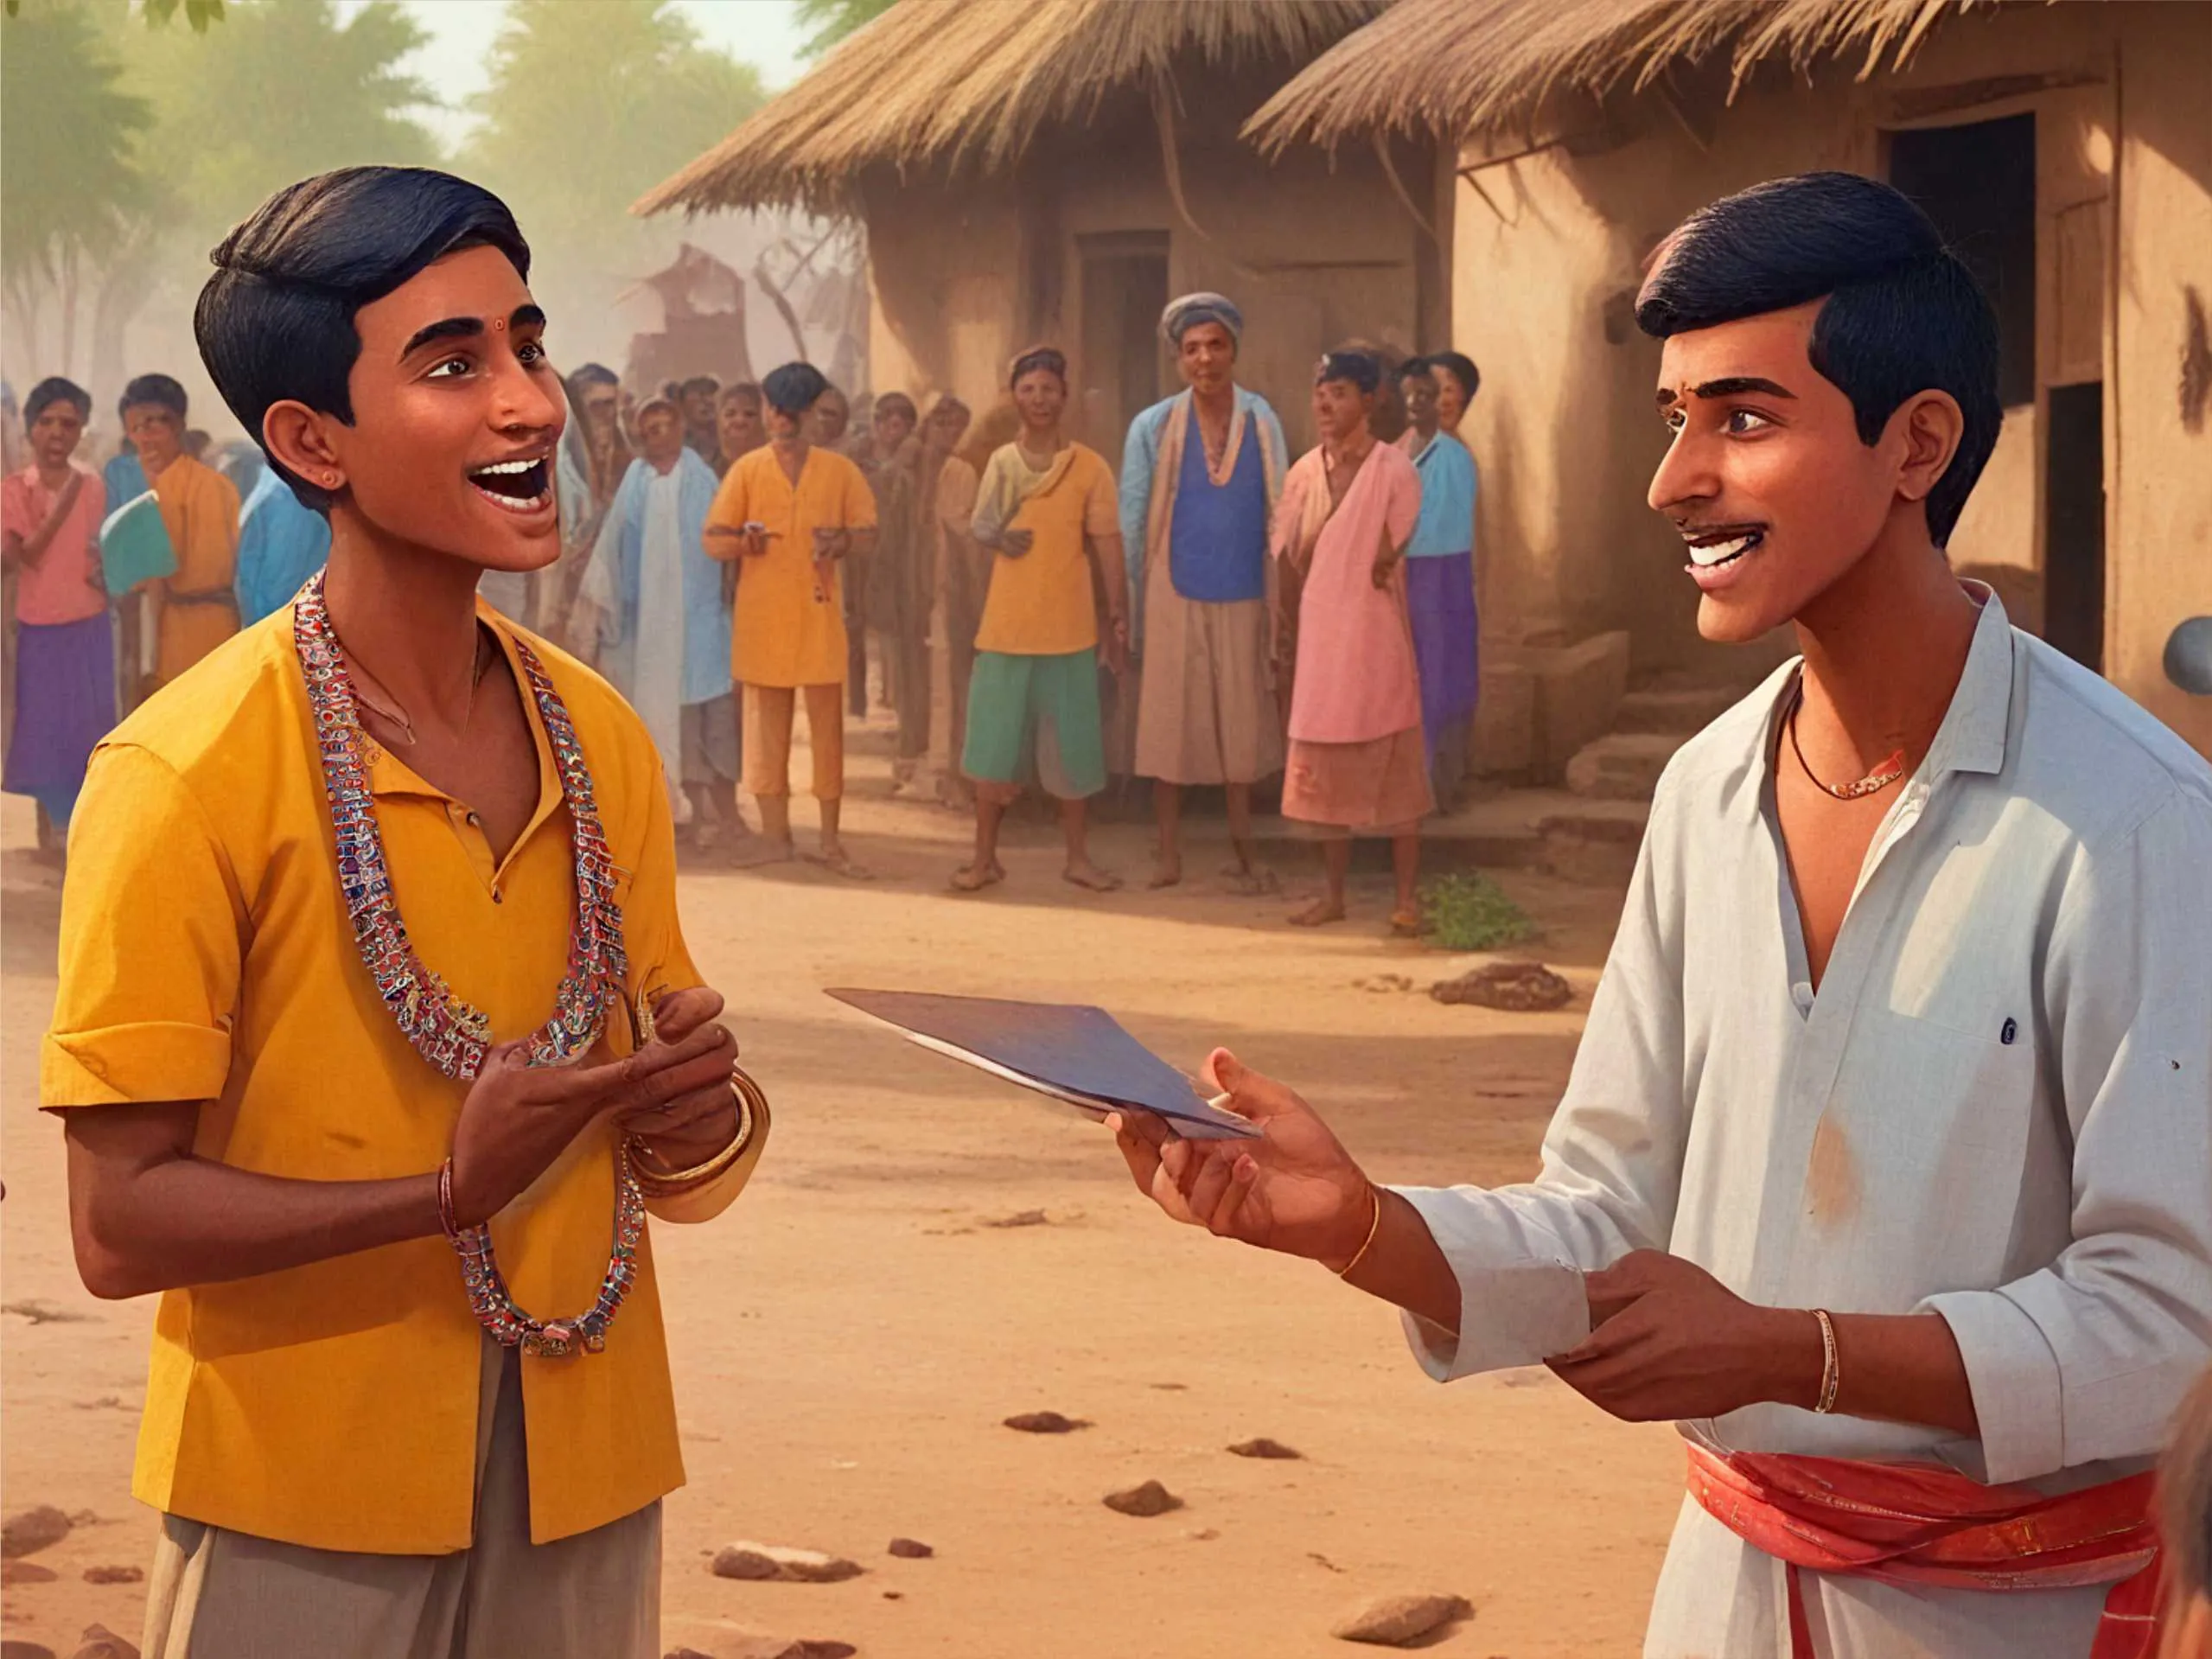 cartoon image of Indian village boys